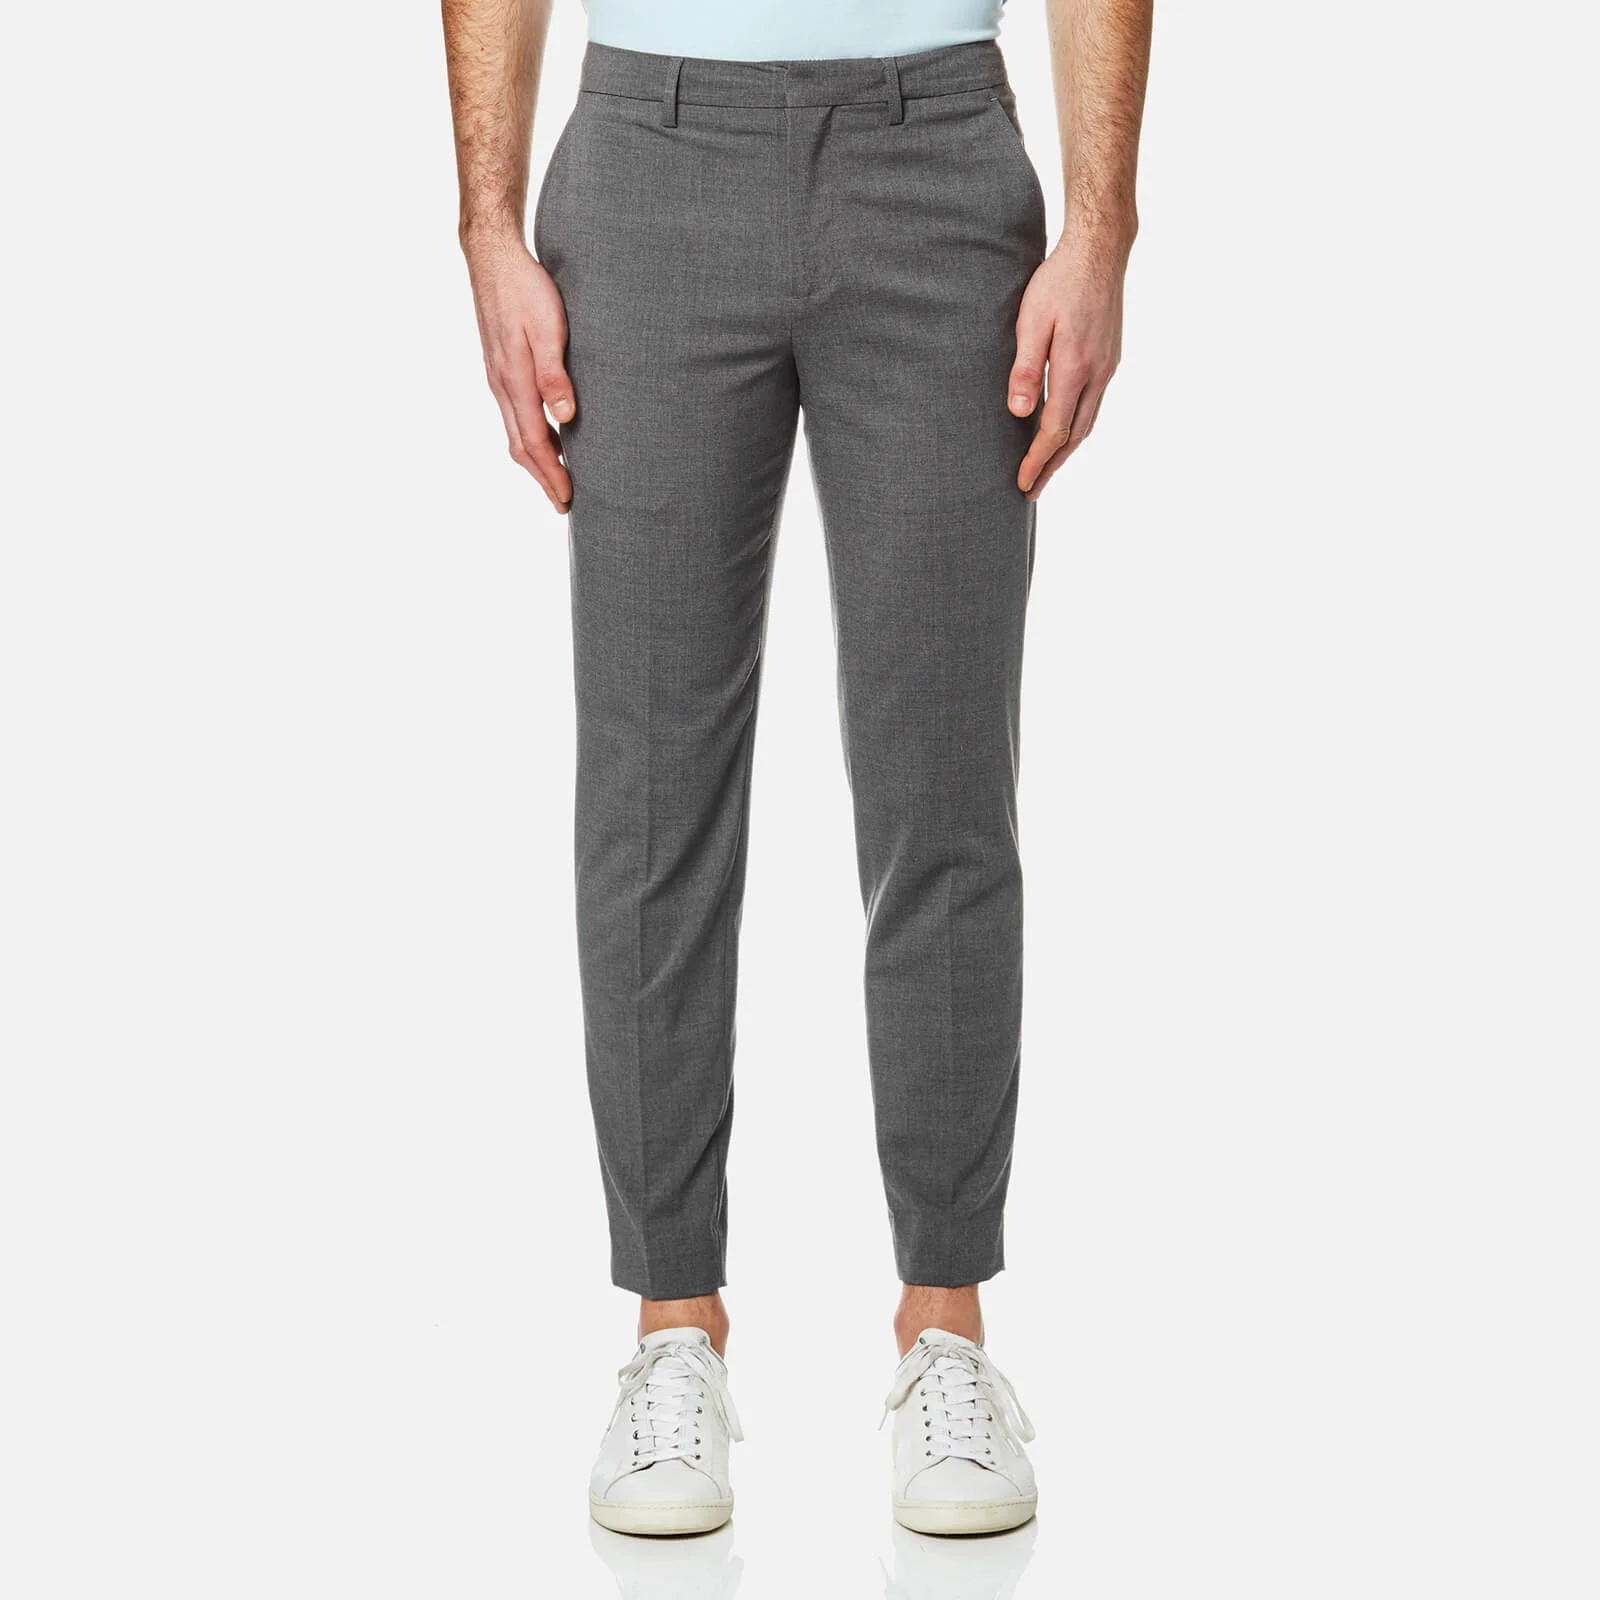 Lacoste L!ve Men's Flannel Chino Pants - Light Grey Jaspe Image 1